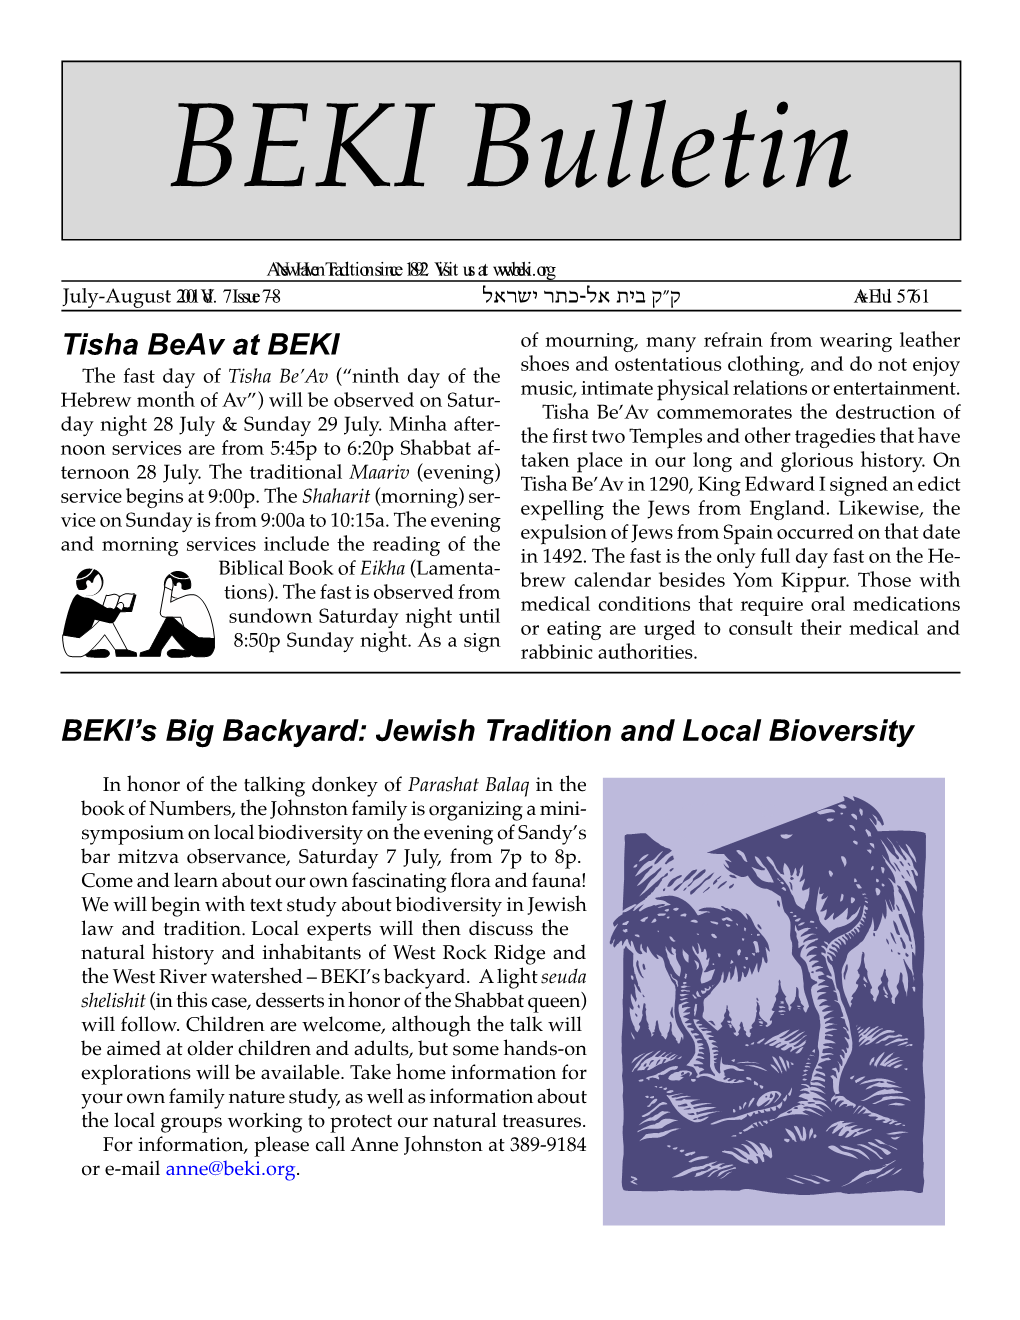 BEKI Bulletin July